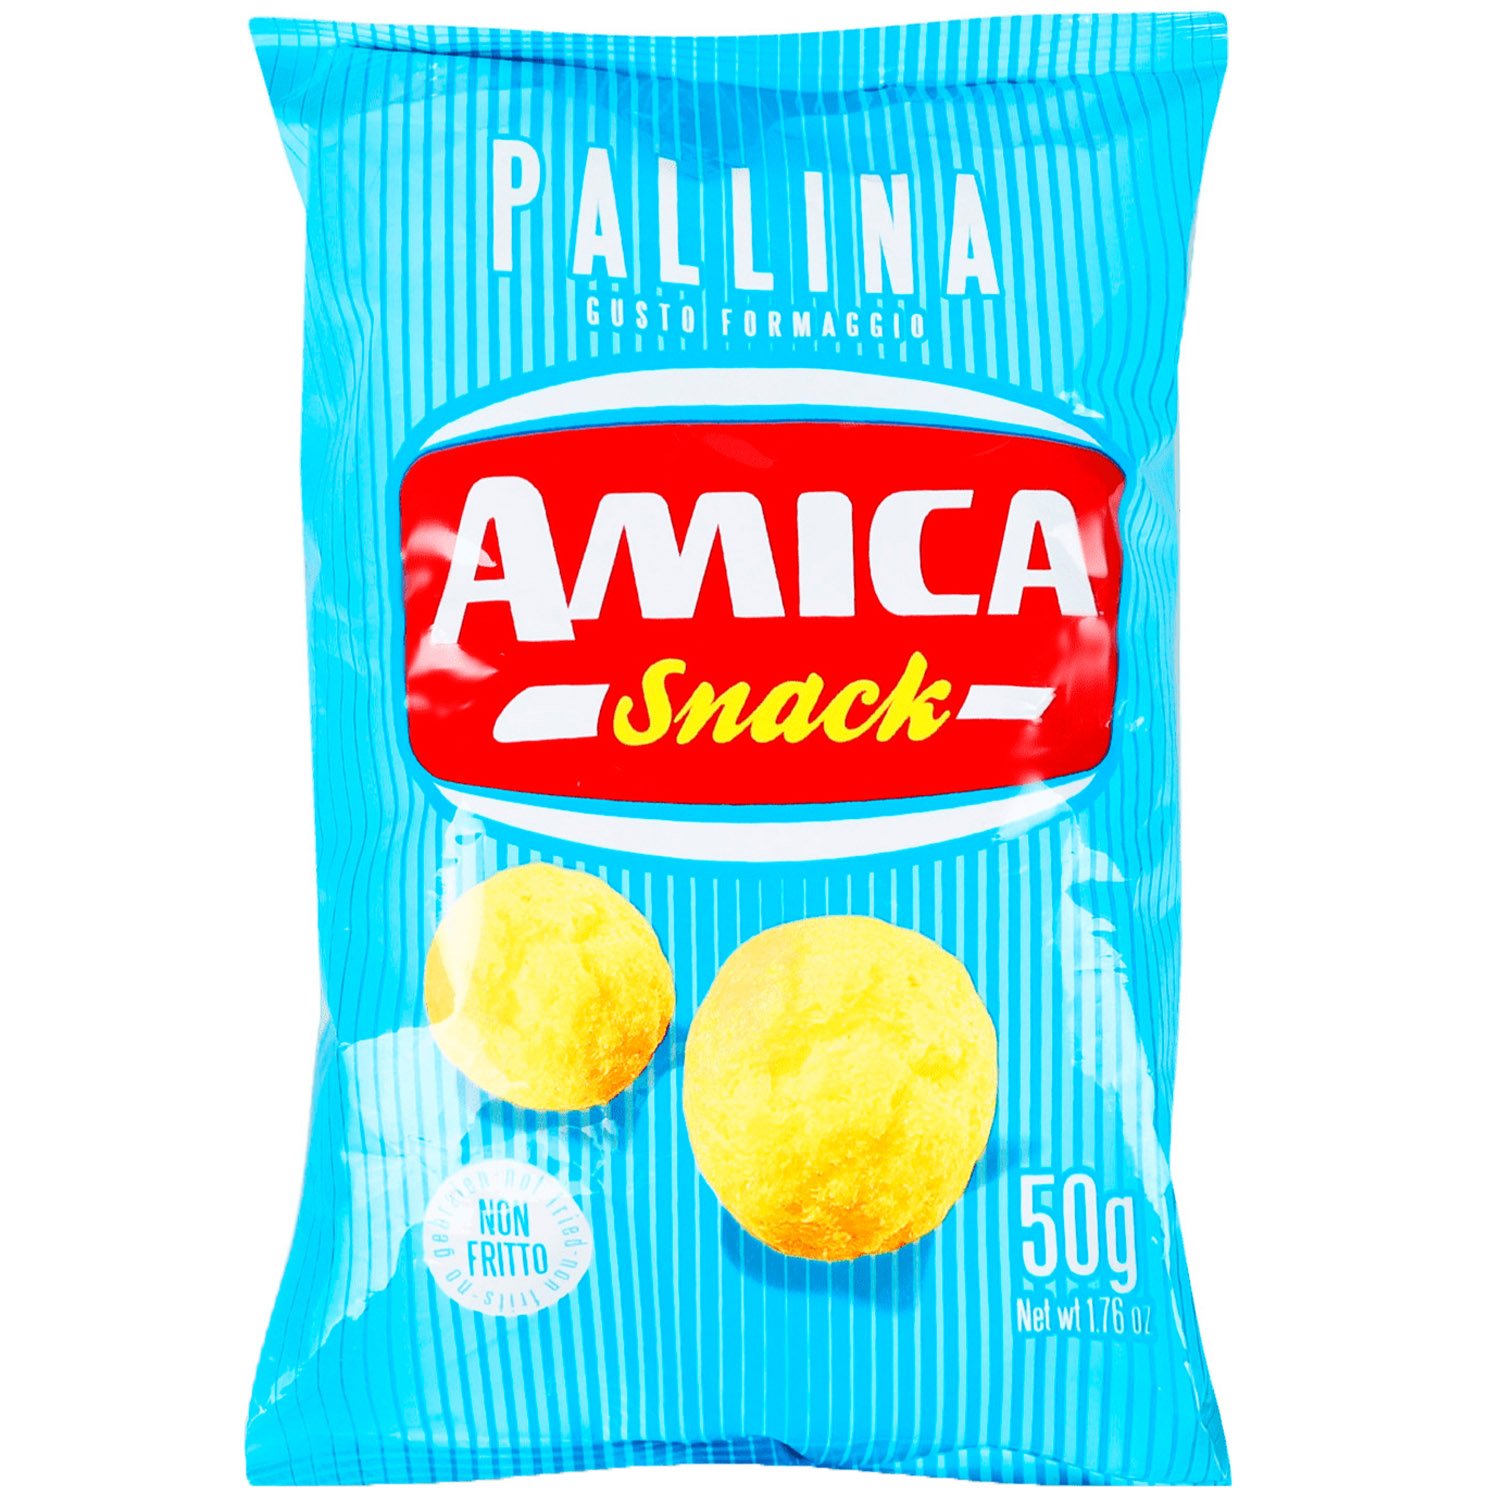 Снеки Amica Cheese Ball кукурузные со вкусом сыра 50 г (918446) - фото 1